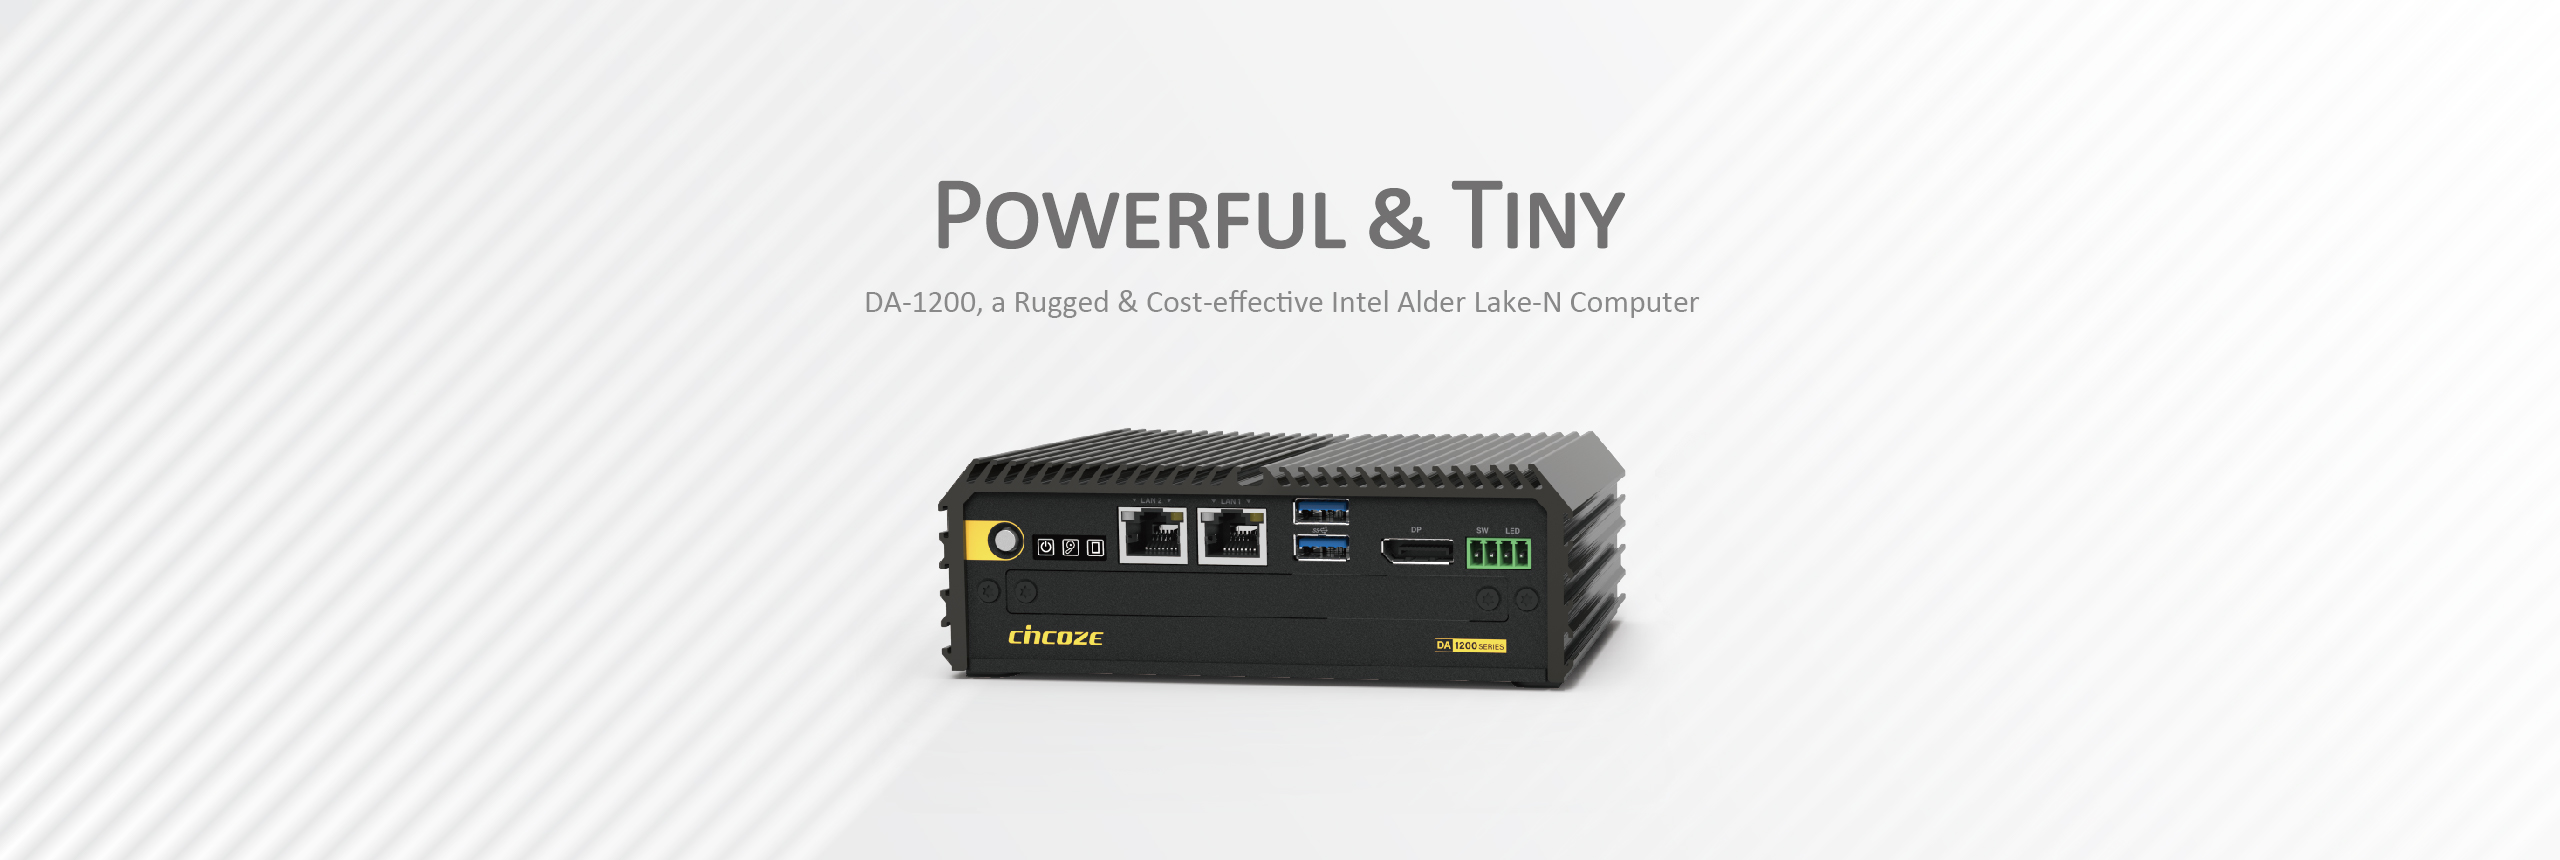 Powerful & Tiny - DA-1200, a Rugged & Cost-effective Intel Alder Lake-N Computer